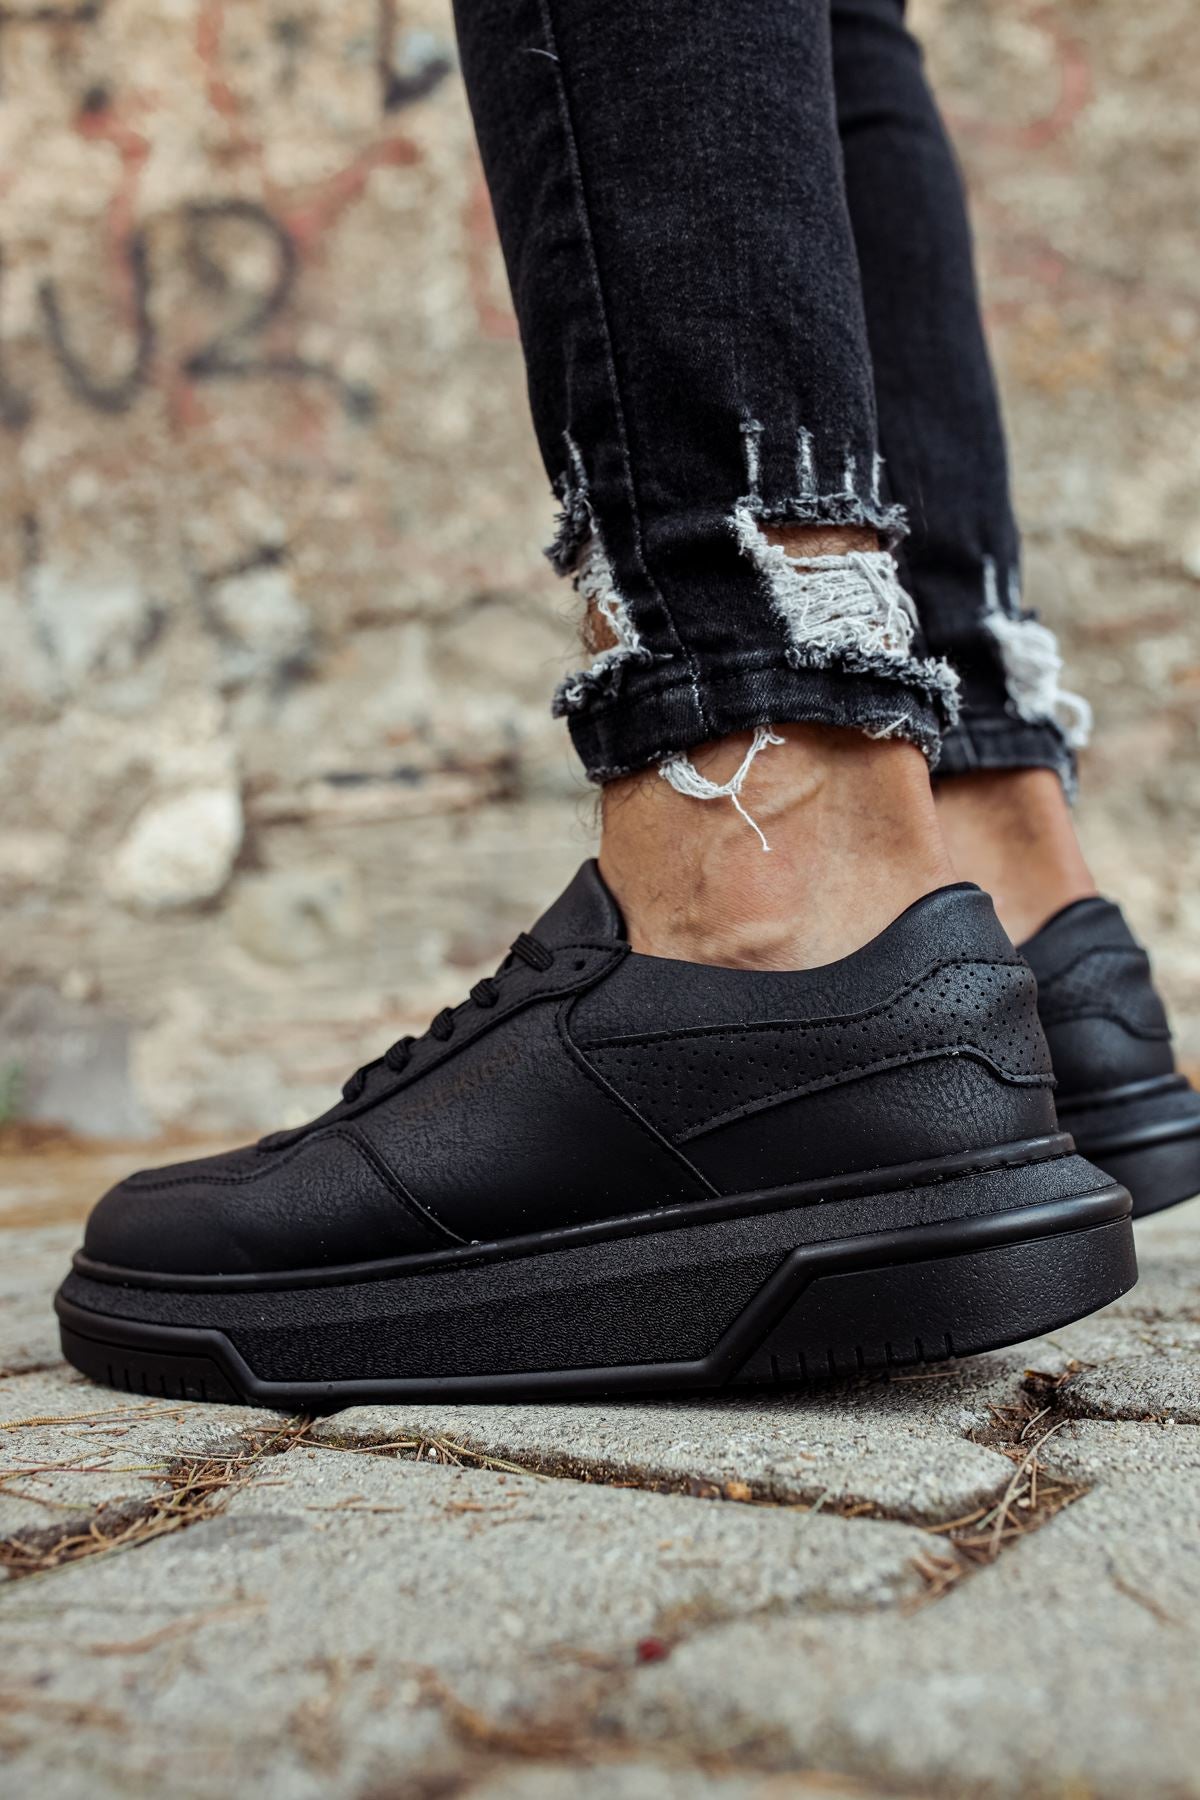 CH075 Black Sole Men's Unisex Sneaker Shoes - STREETMODE ™